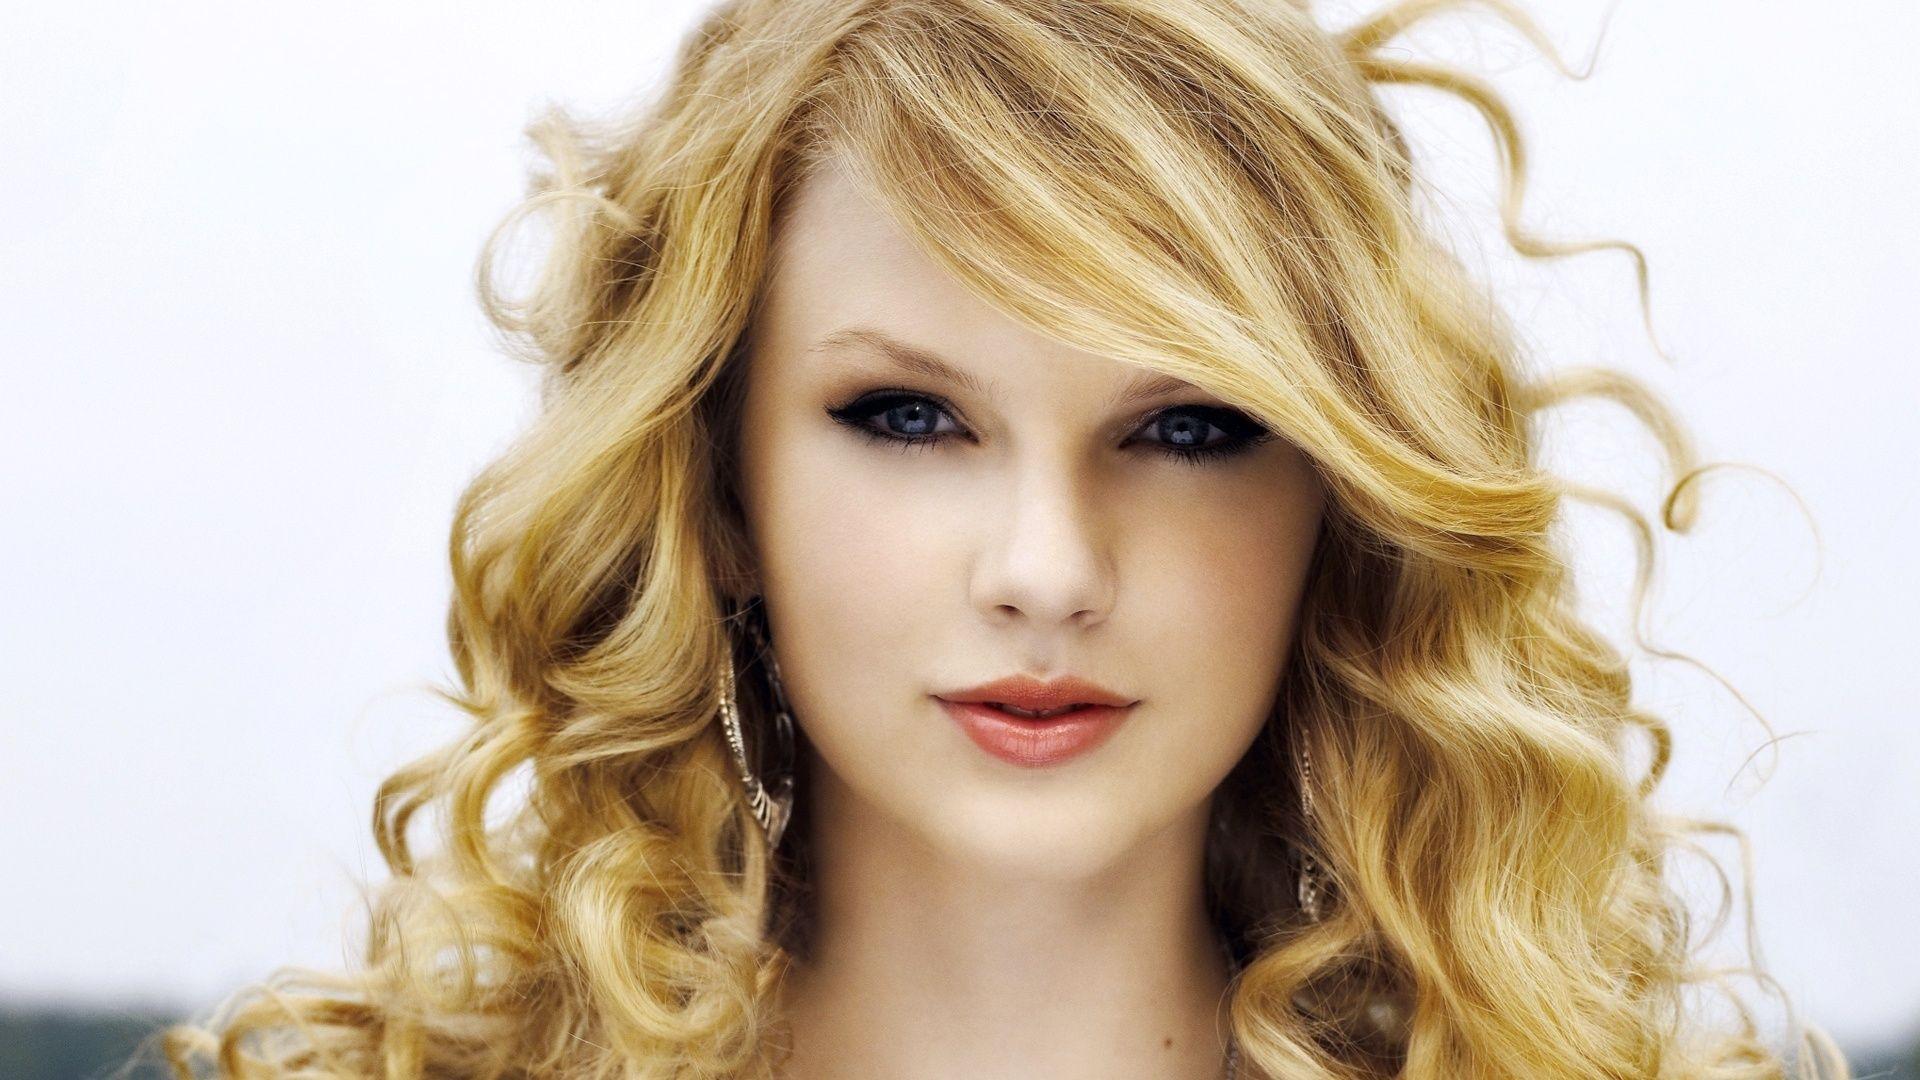 Taylor Swift Wallpeper HD Free Download. New HD Wallpaper Download